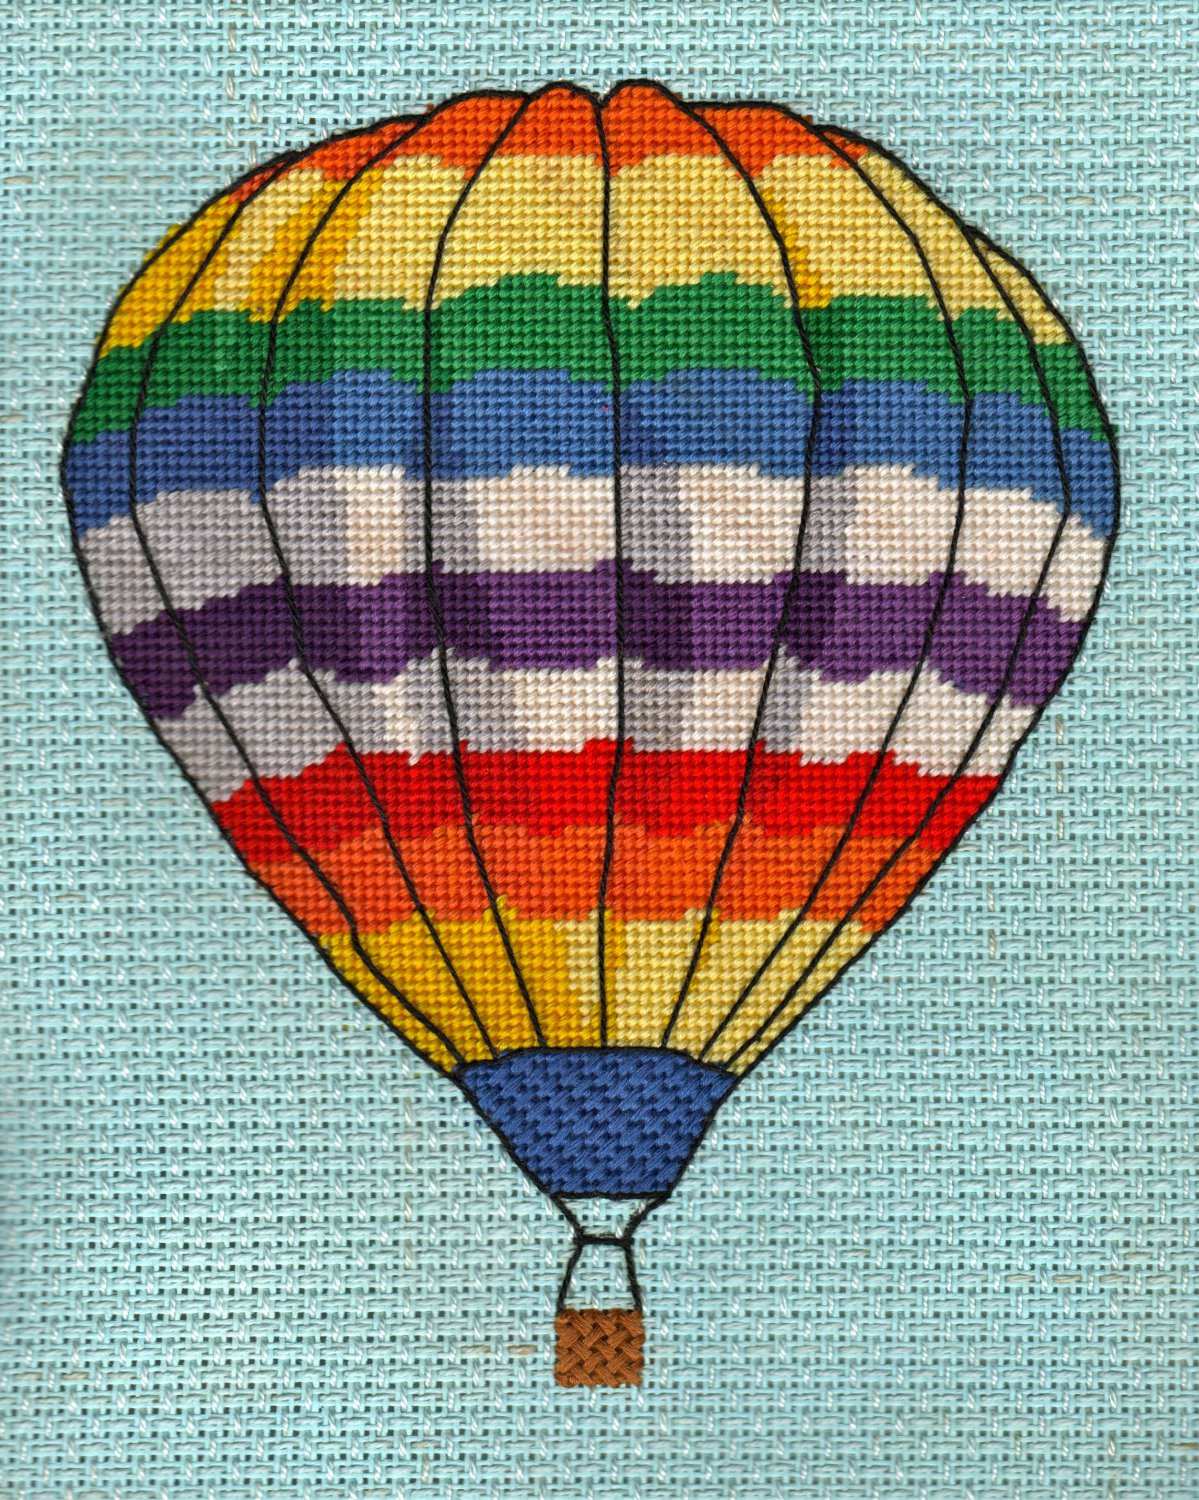 Balloon in Flight Completed Needlepoint